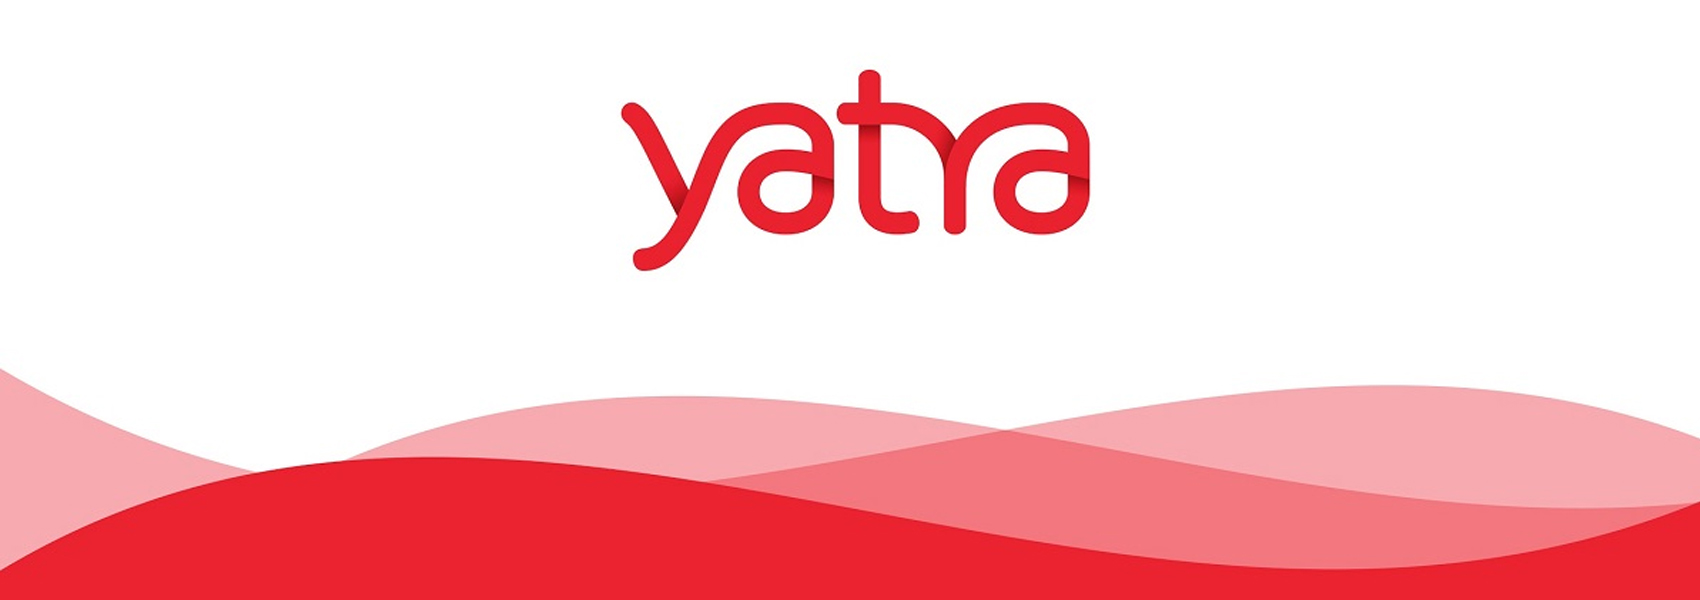 Yatra Online Raising,Startup Stories,Startup News India,Inspiring Stories,Latest Business News 2018,Yatra Online Plans to Raise 9 Mn Shares,Yatra Online Shares,Yatra Online Latest Business News,Largest Online Travel Agent Yatra,Yatra Online CEO